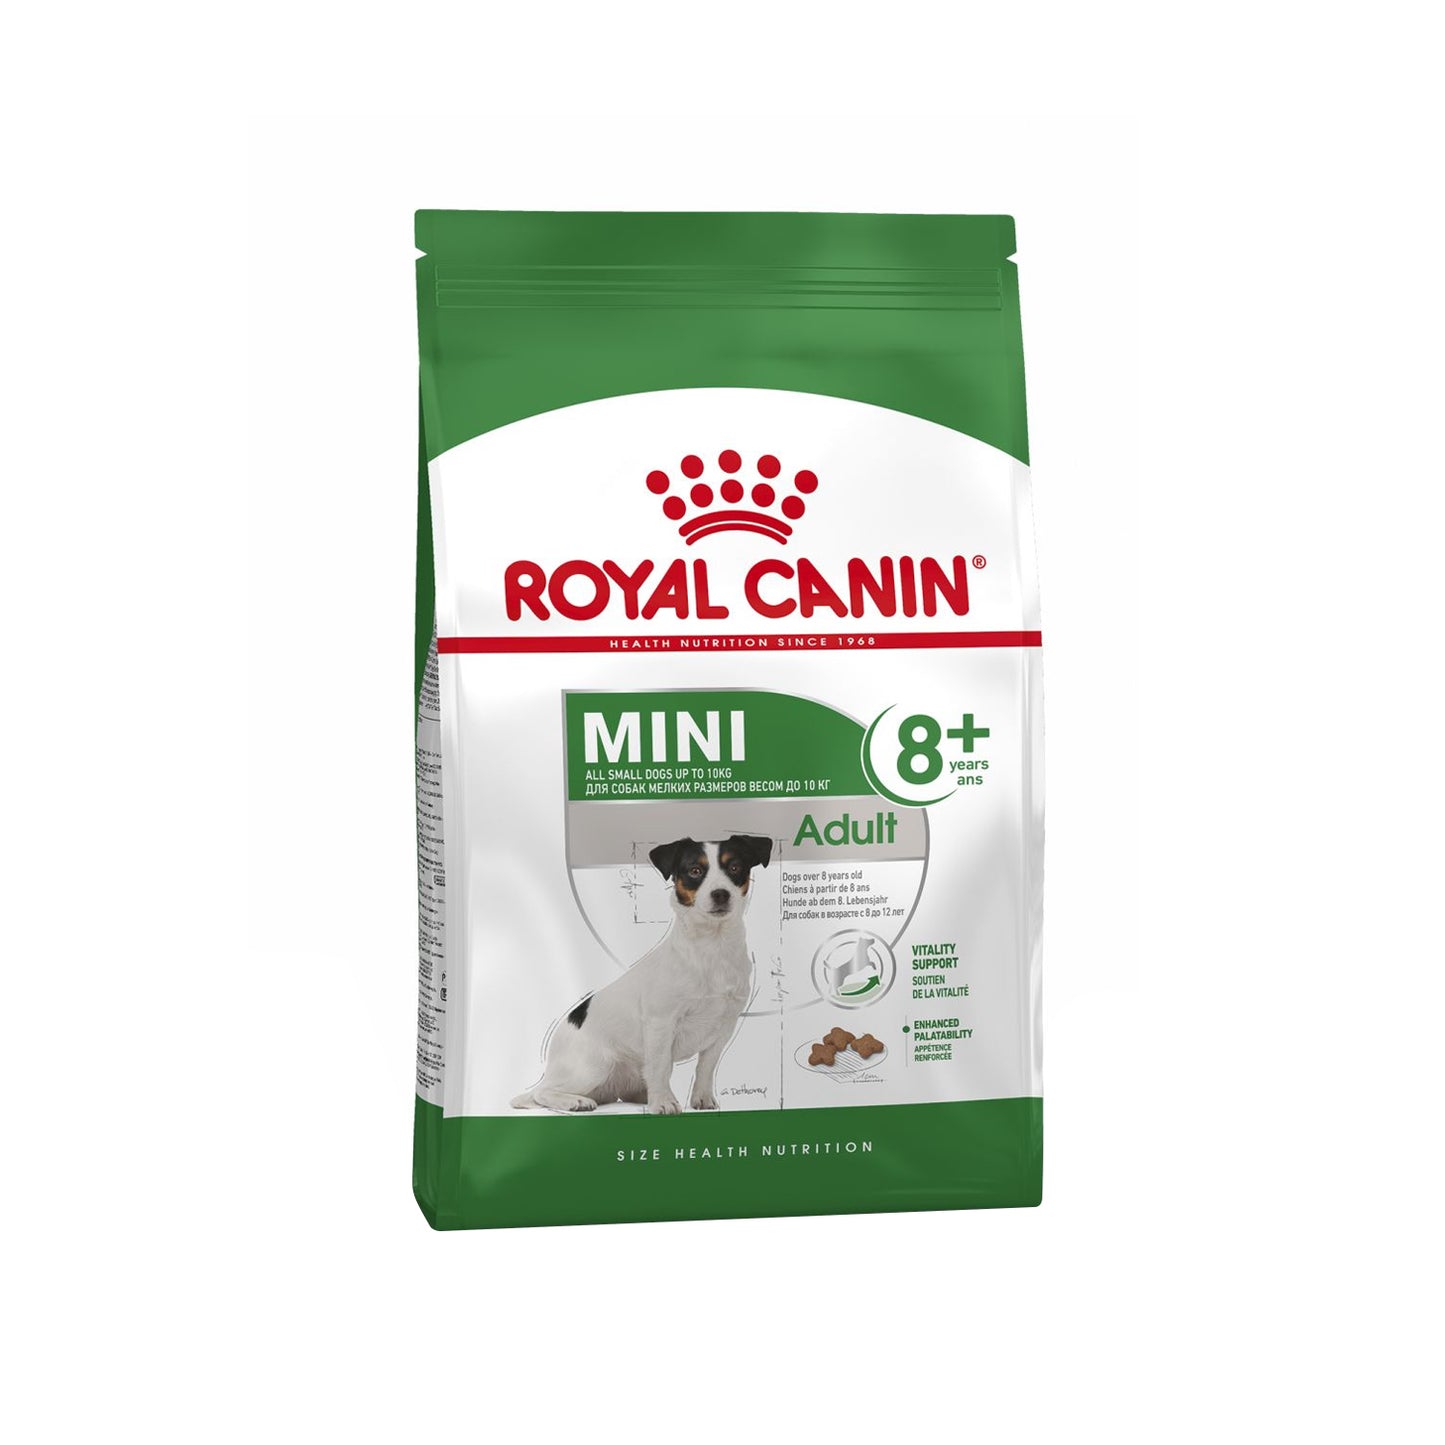 Royal Canin - Mini Adult 8+ Dry Food